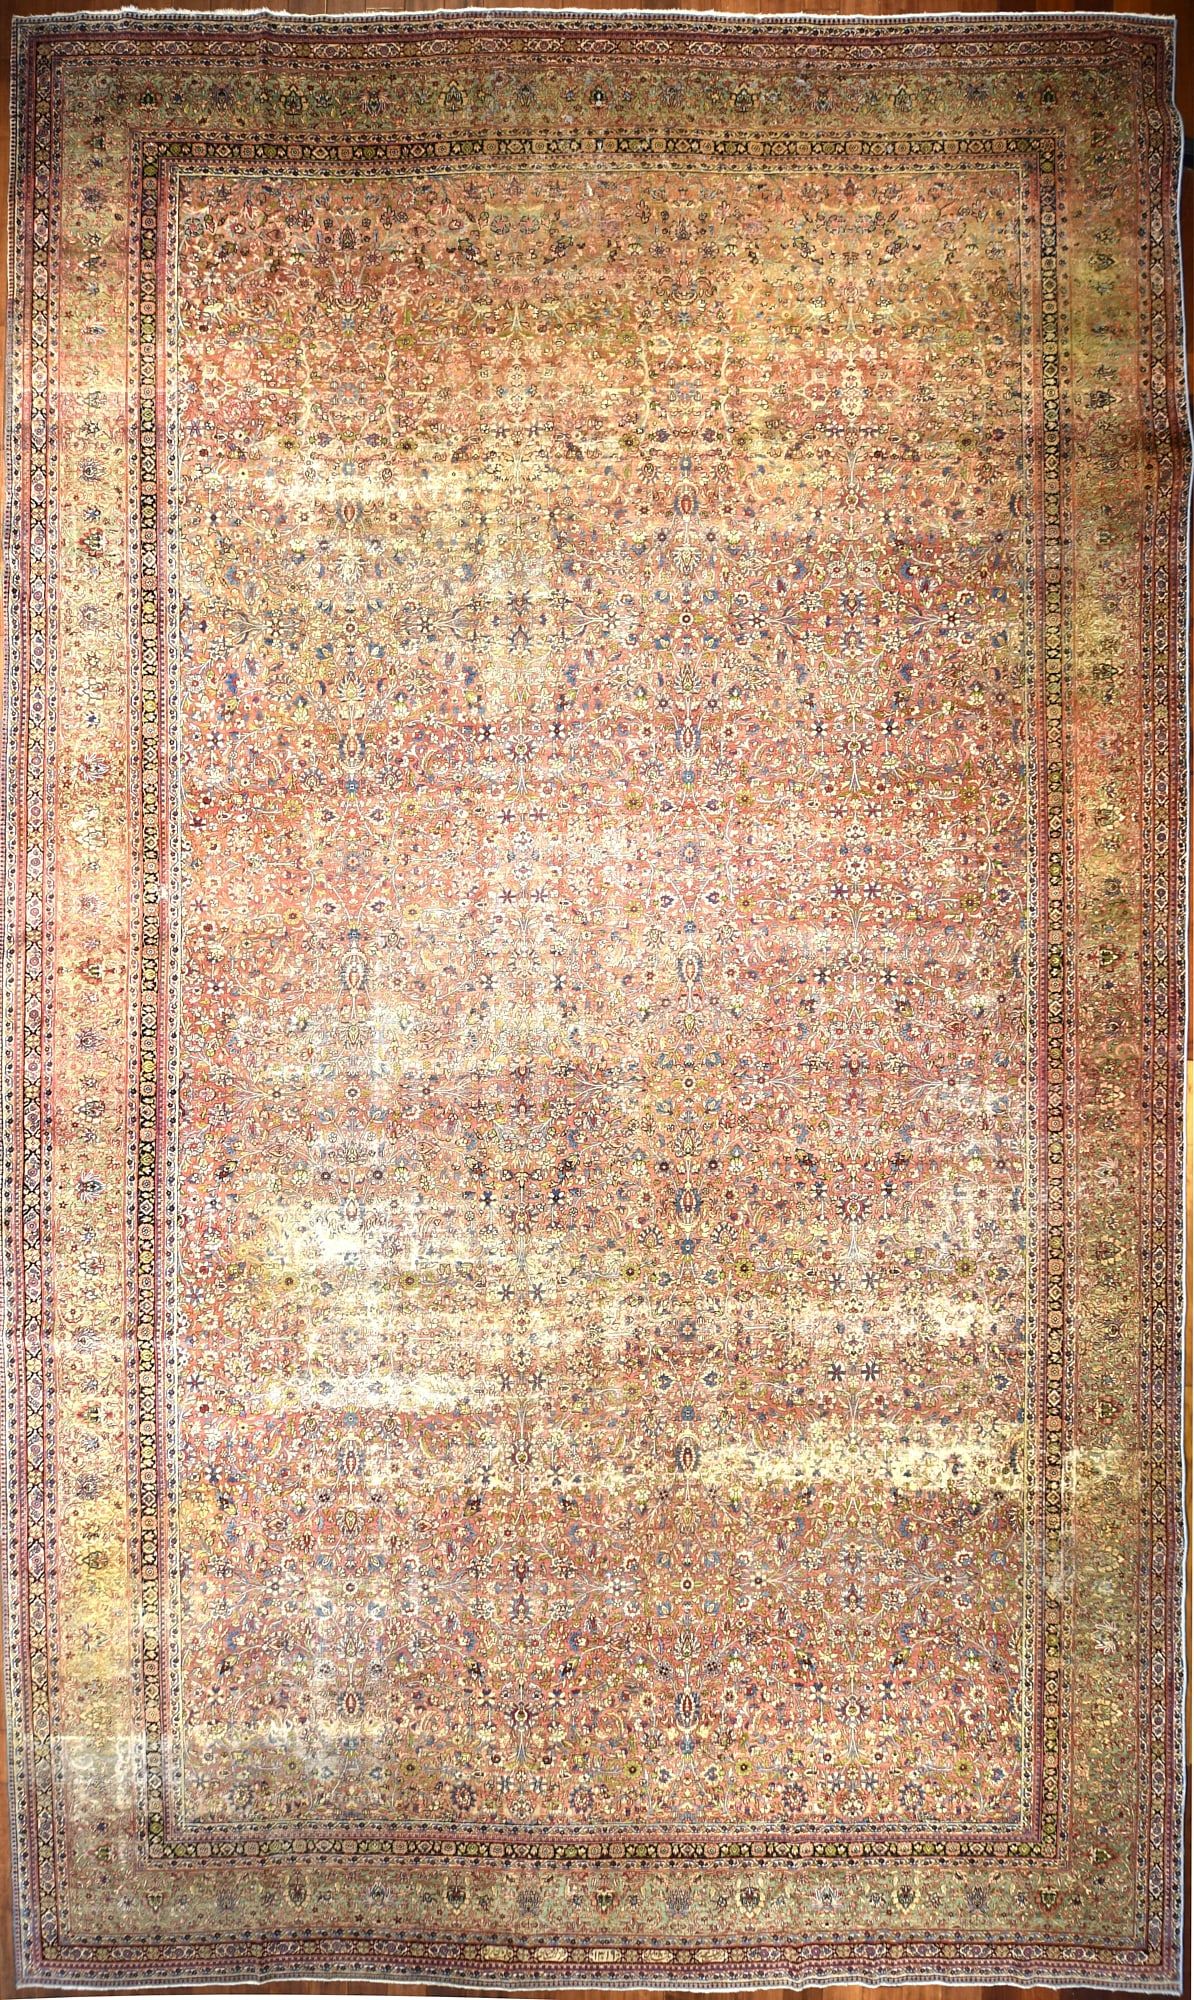 A KERMAN CARPETA Kerman carpetdimensions 2fb341d